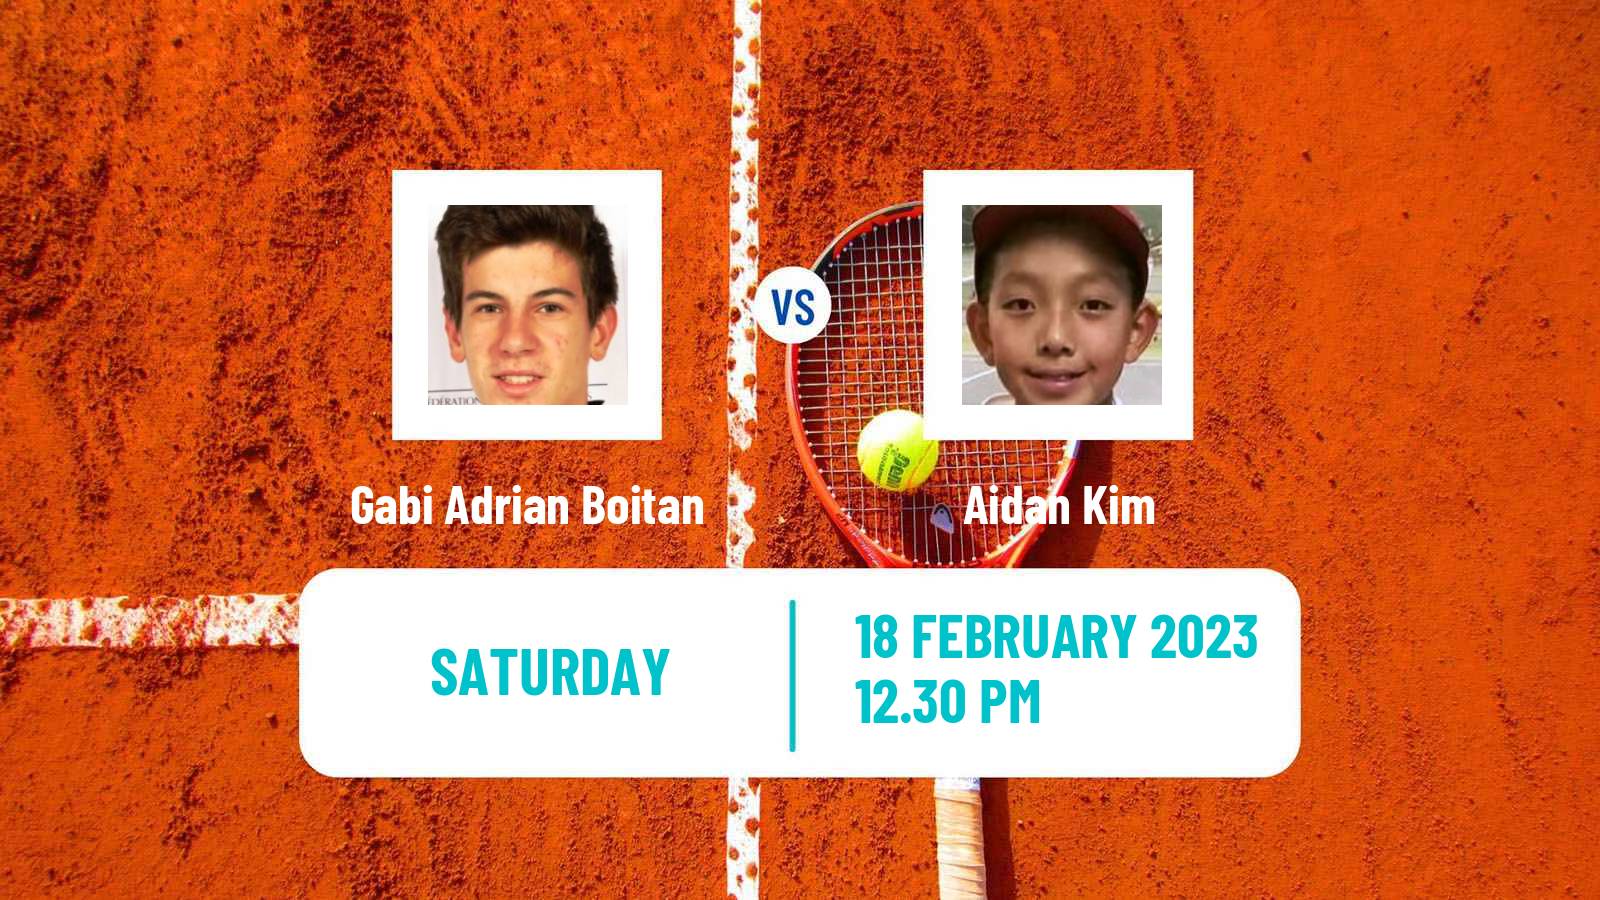 Tennis ITF Tournaments Gabi Adrian Boitan - Aidan Kim